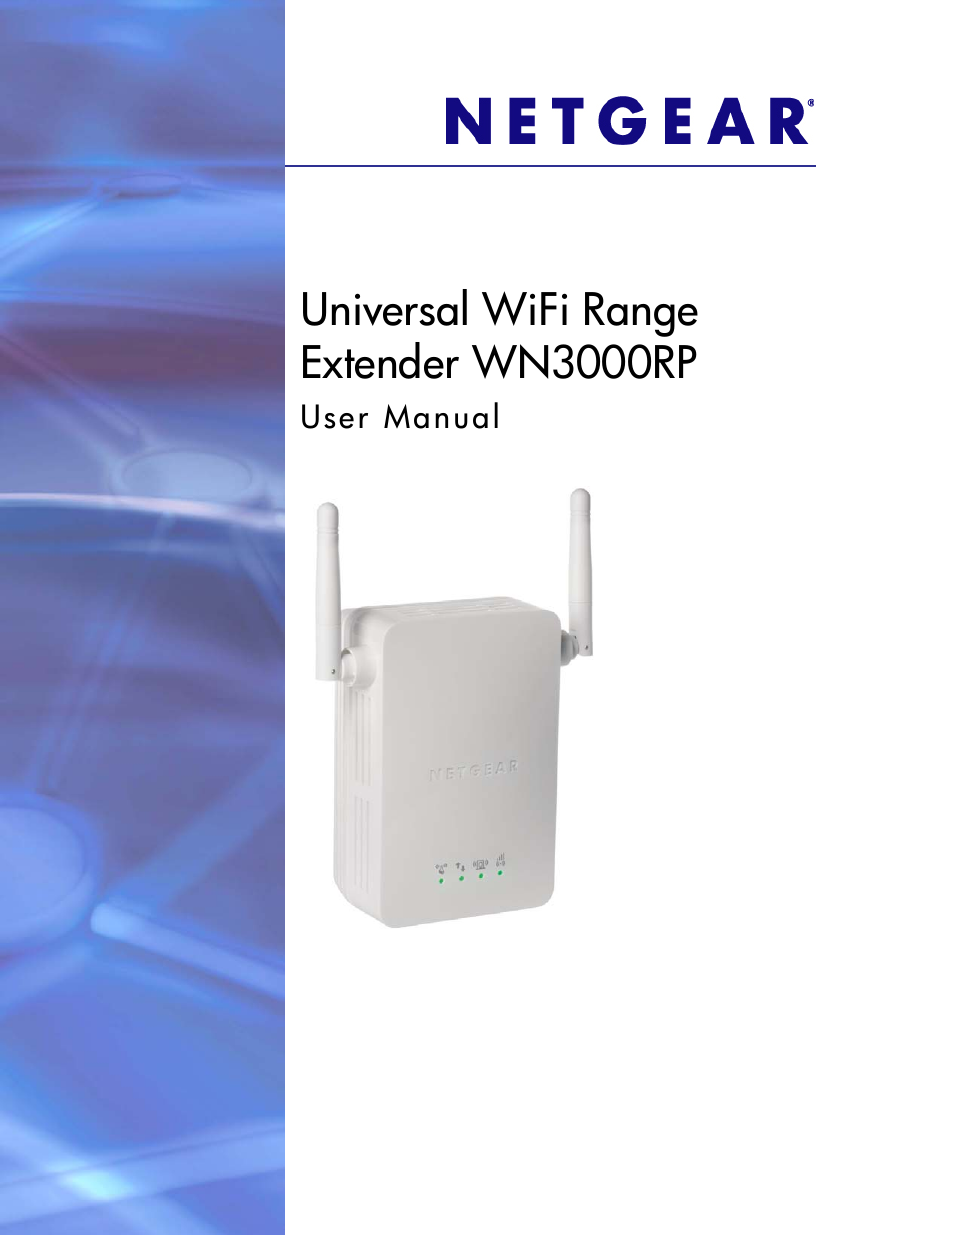 NETGEAR Universal WiFi Range Extender WN3000RP User Manual | 32 pages